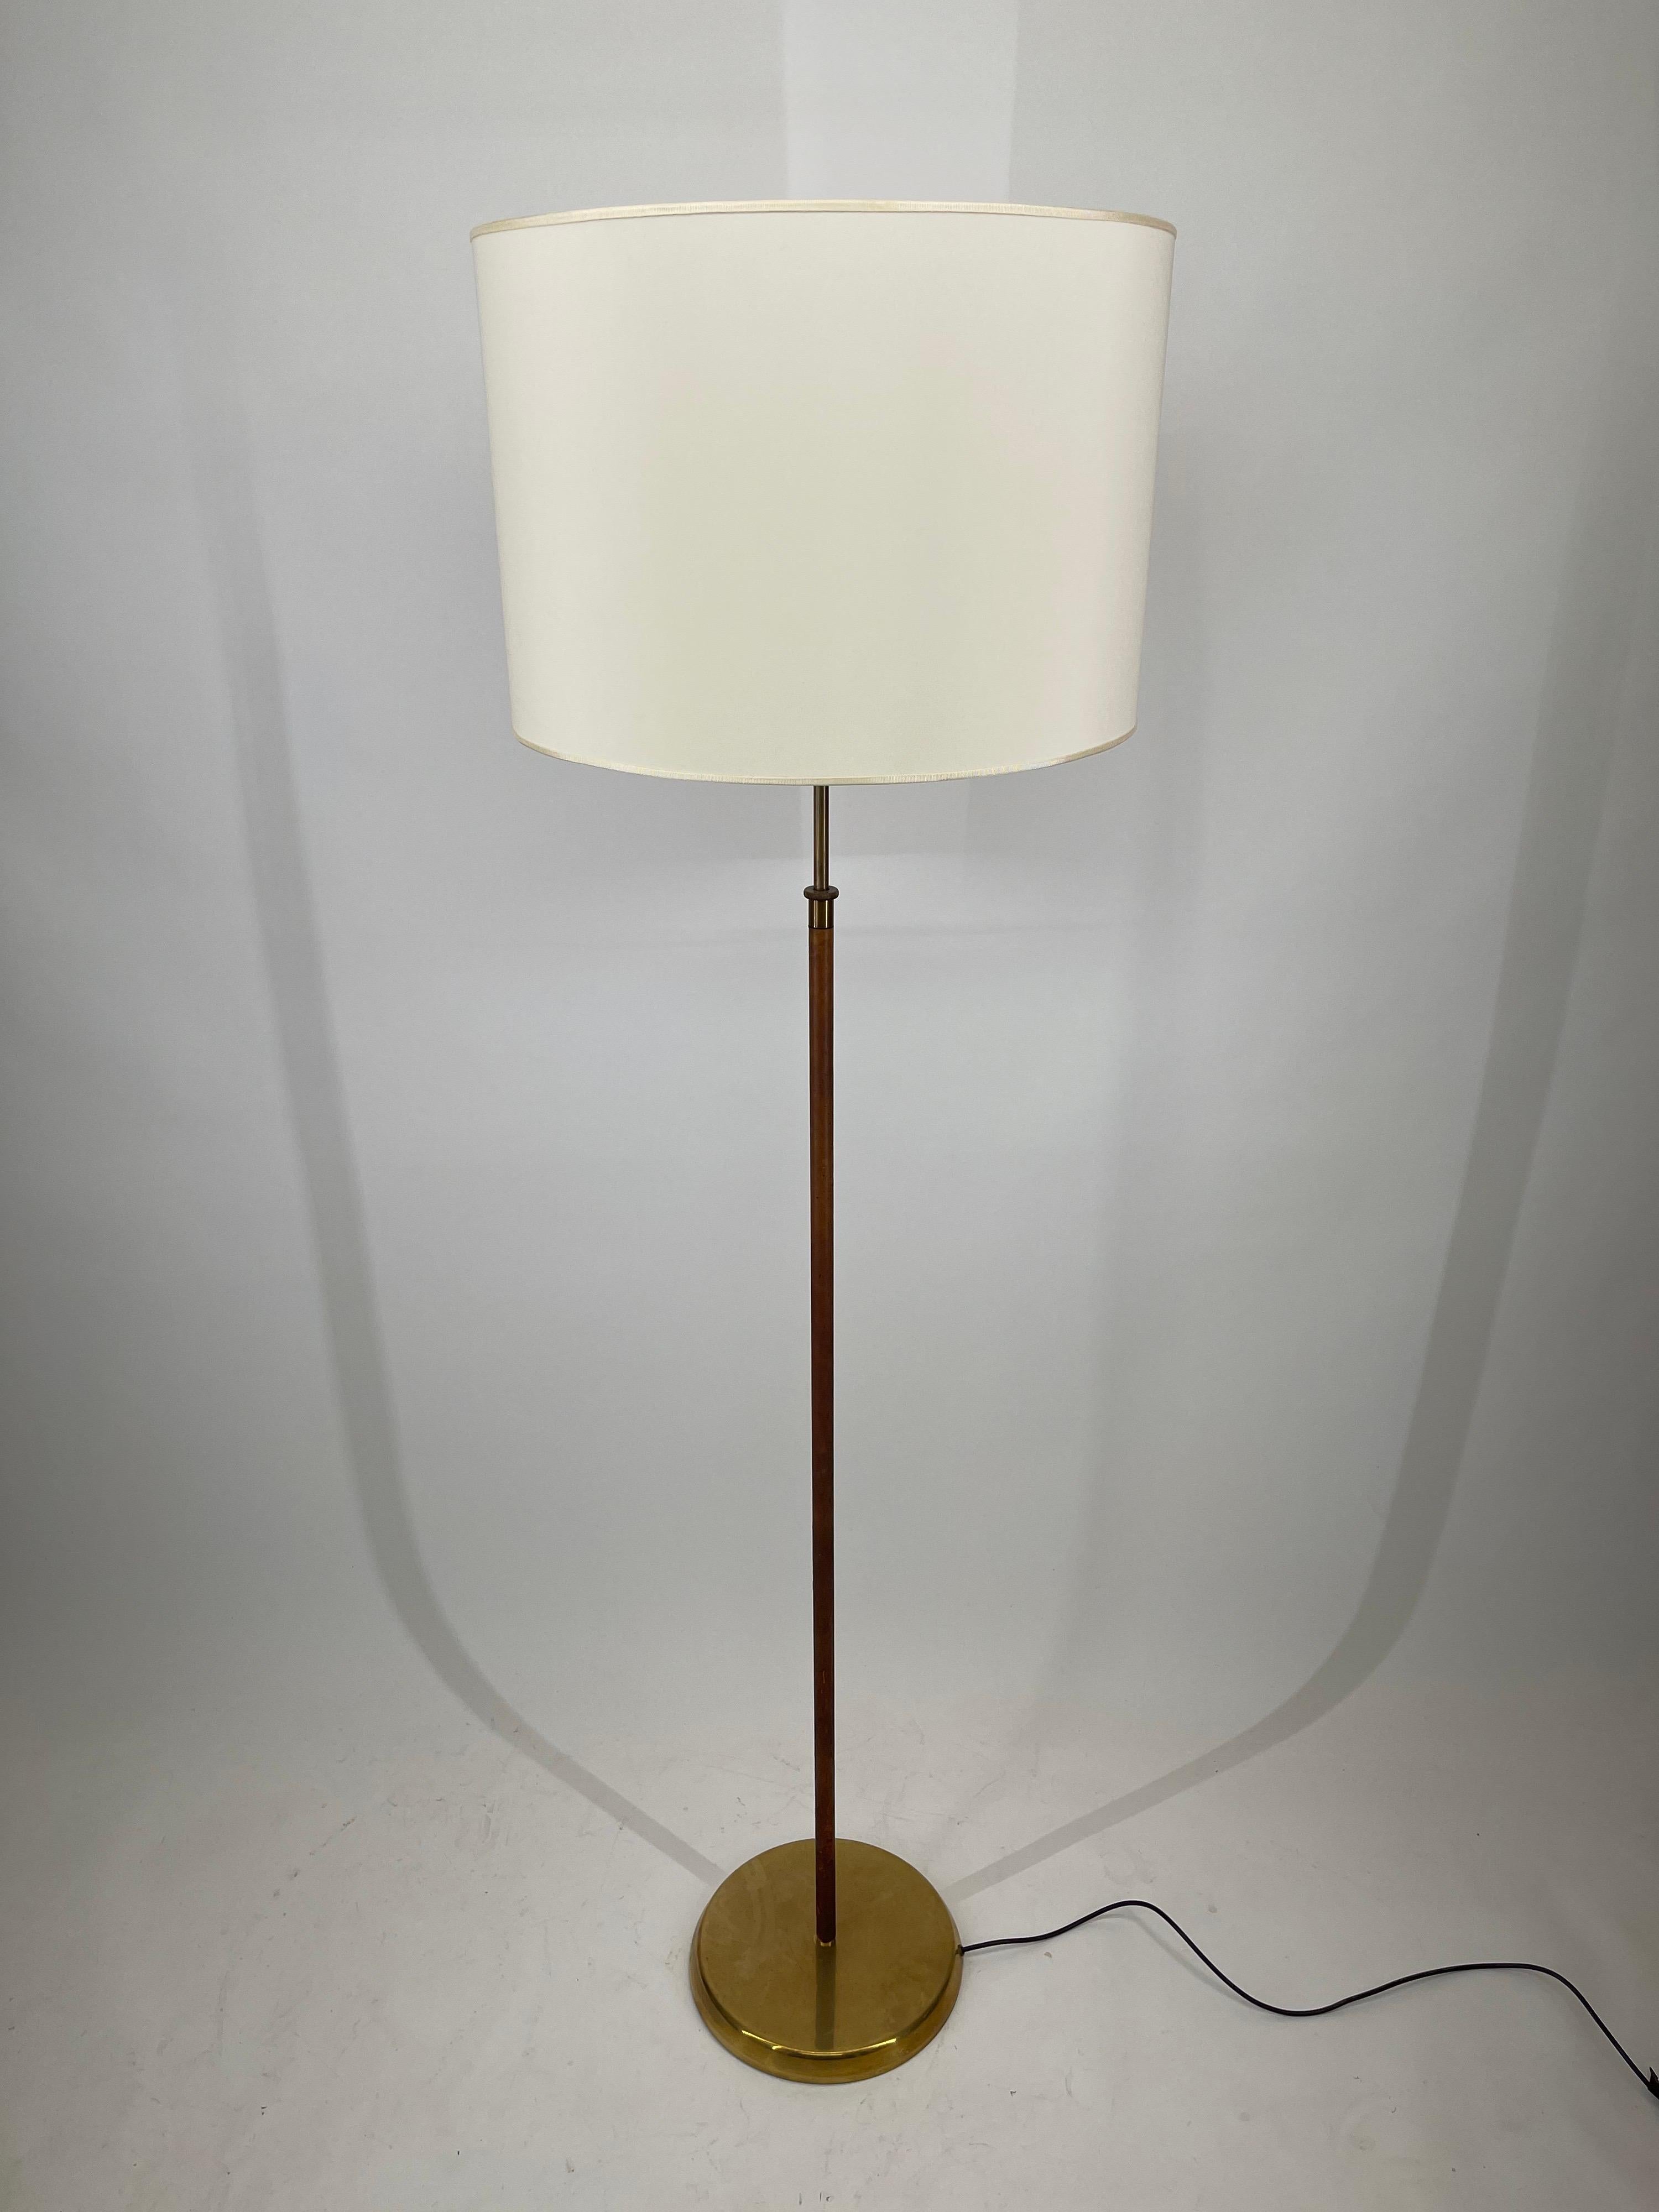 Kalmar floor lamp, Brass Height Adjustable Model 'Telescope', Austria 1969. Original patinated cognac leather with renewed lamp shade.